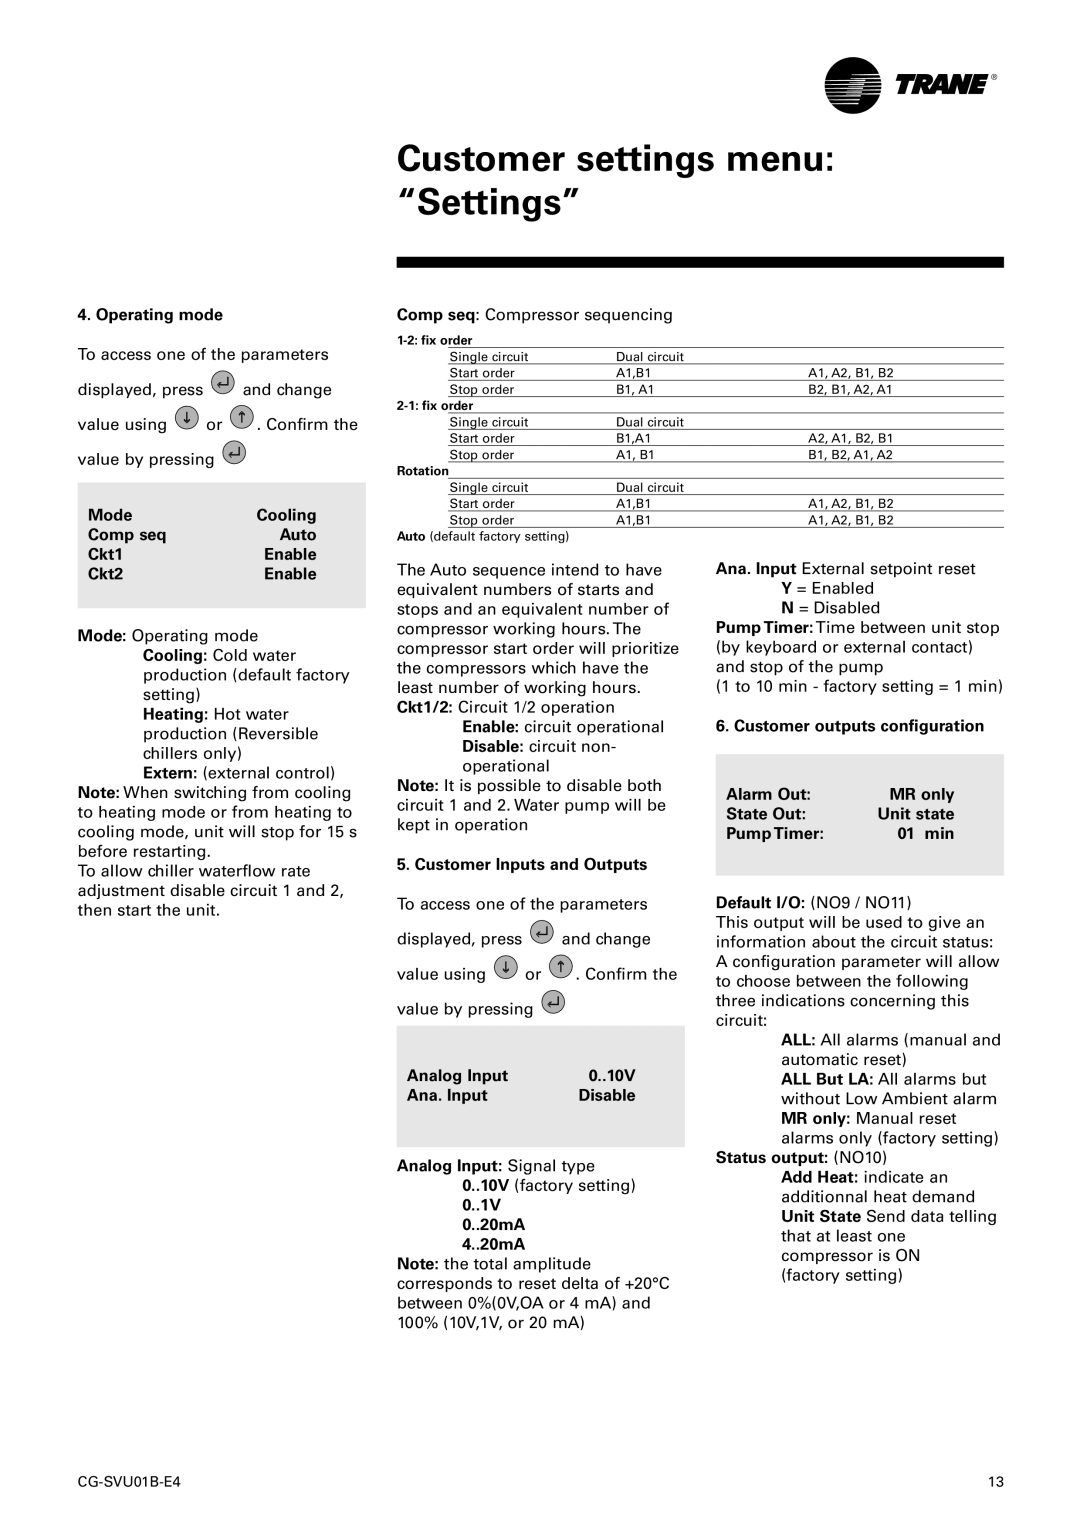 American Standard TRACER CH532 manual Customer settings menu “Settings”, fix order, Rotation 